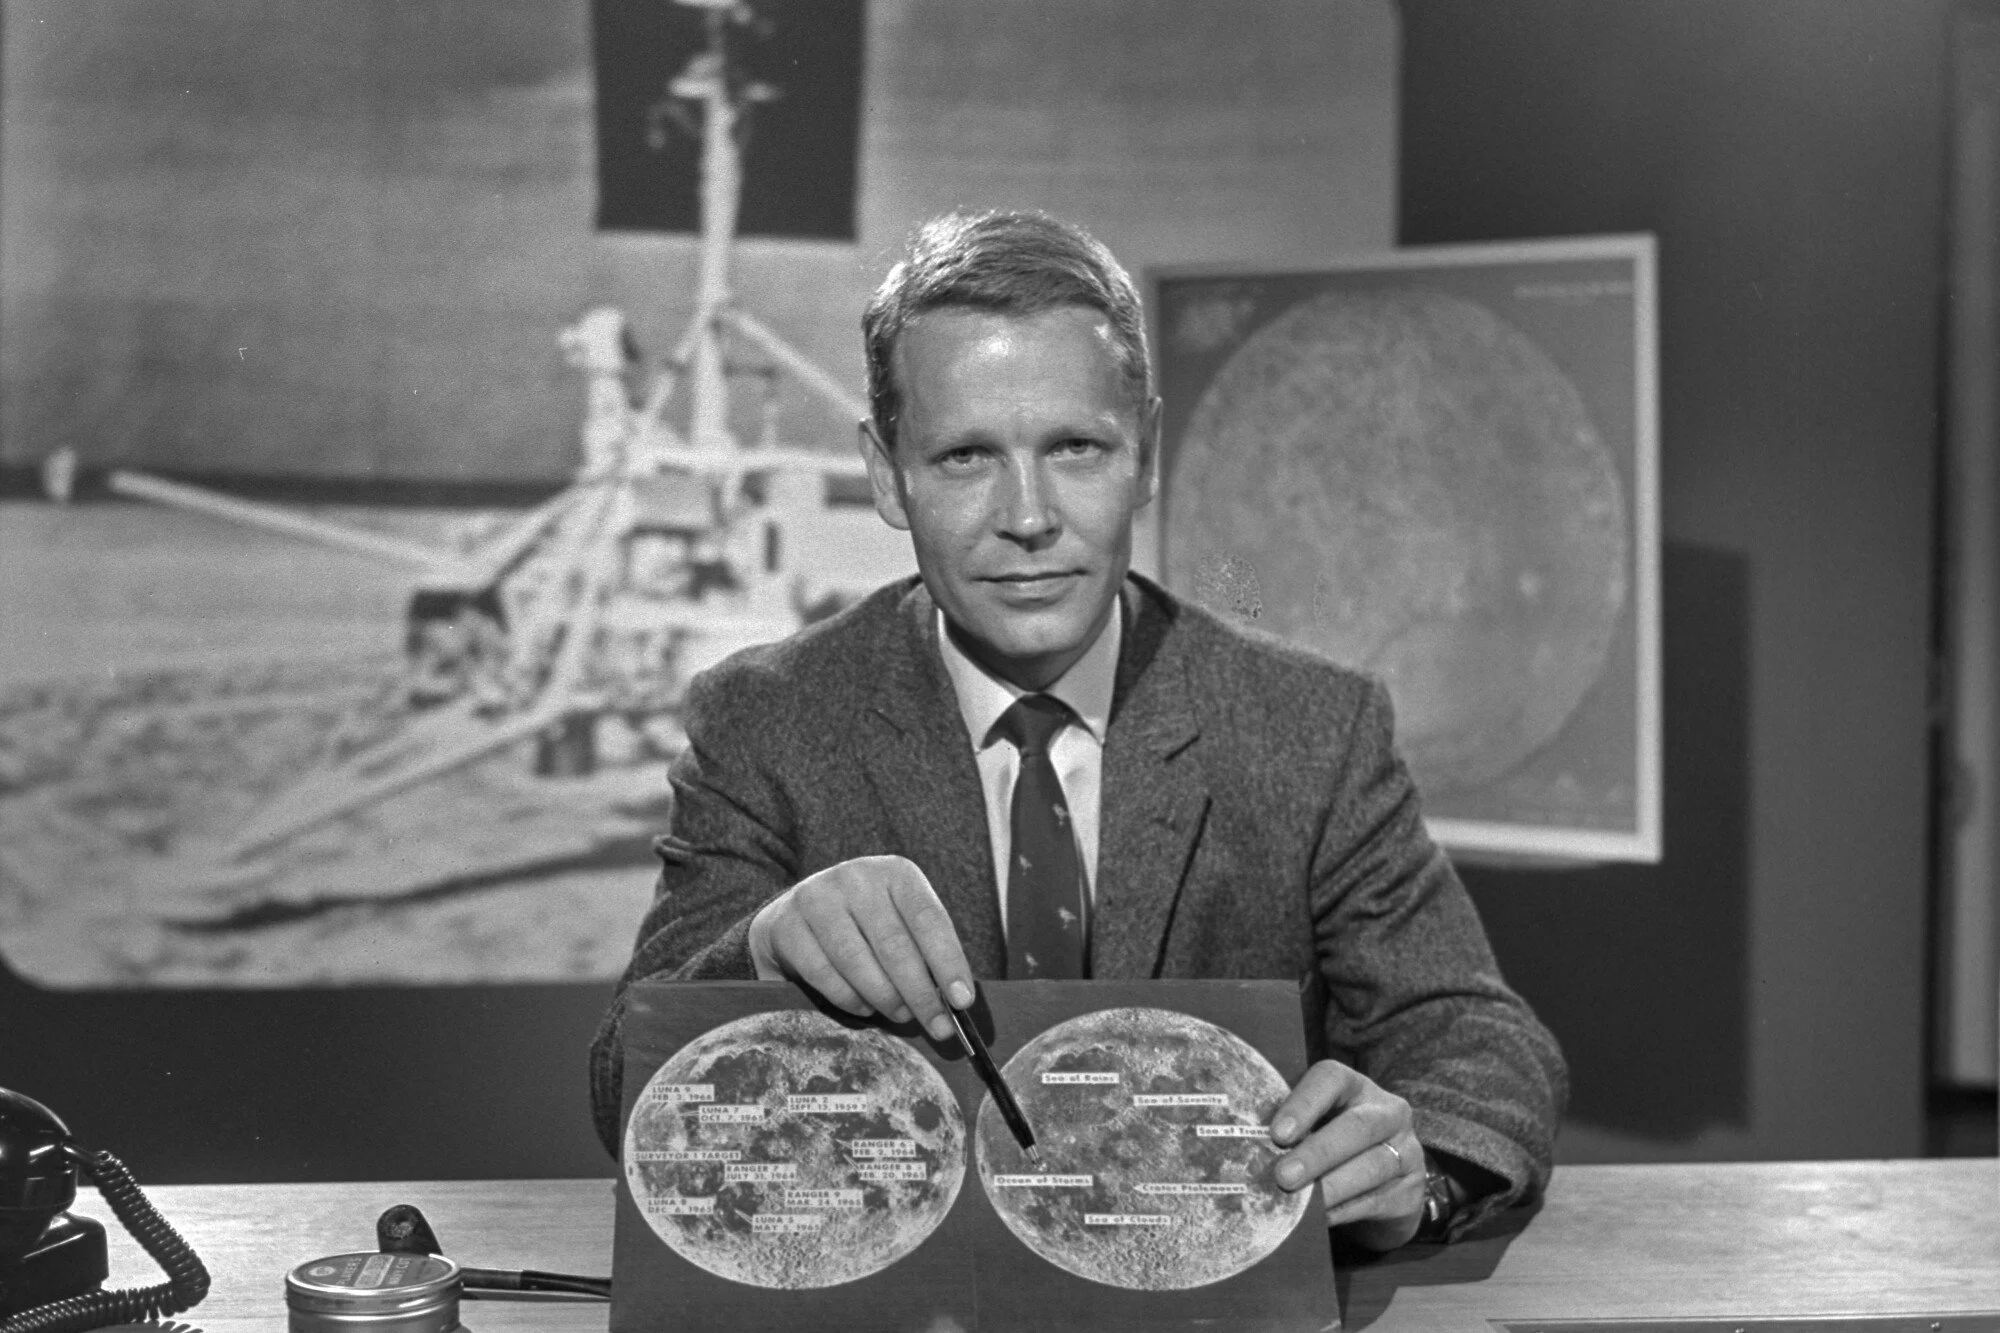 DR TV Månelanding 1969 Claus Toksvig